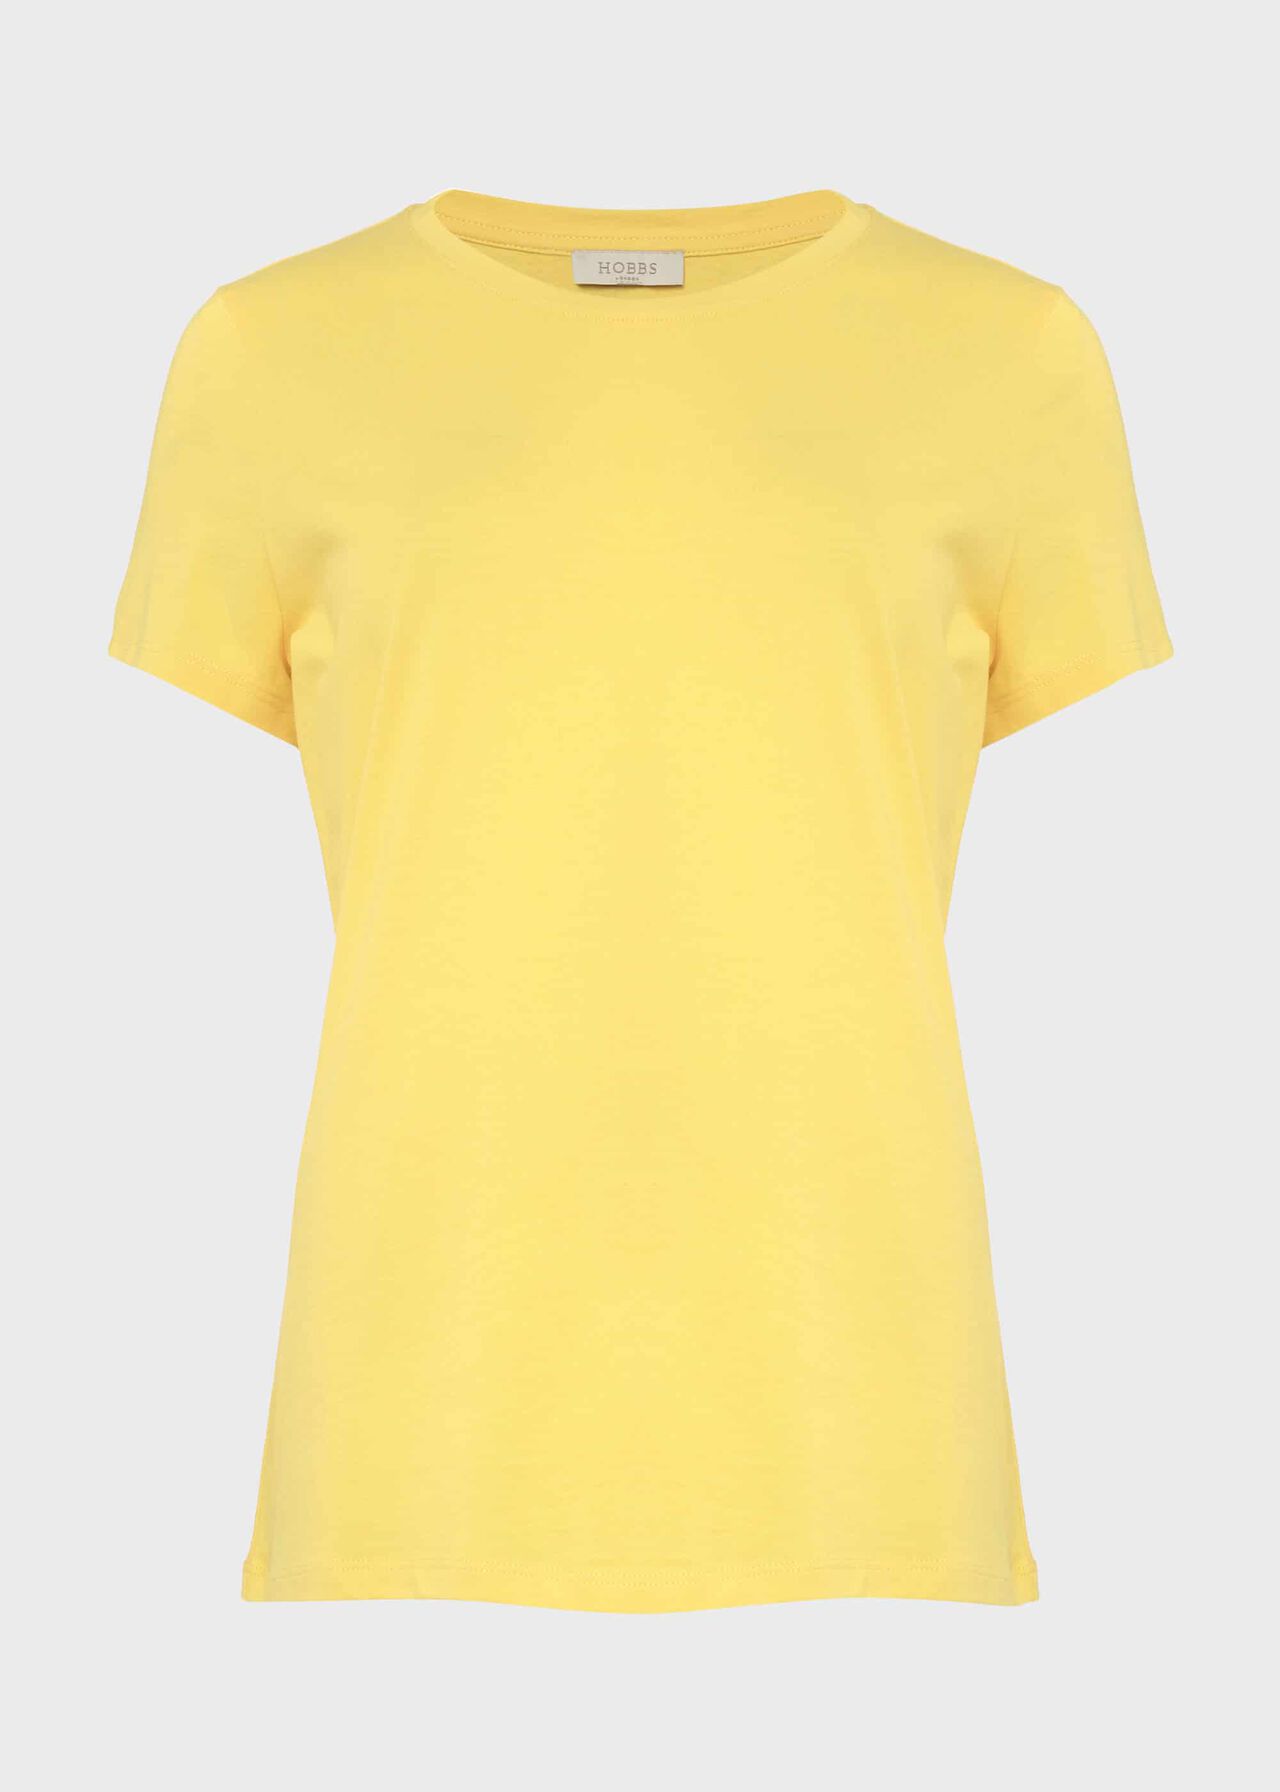 Pixie T-Shirt, Yellow, hi-res